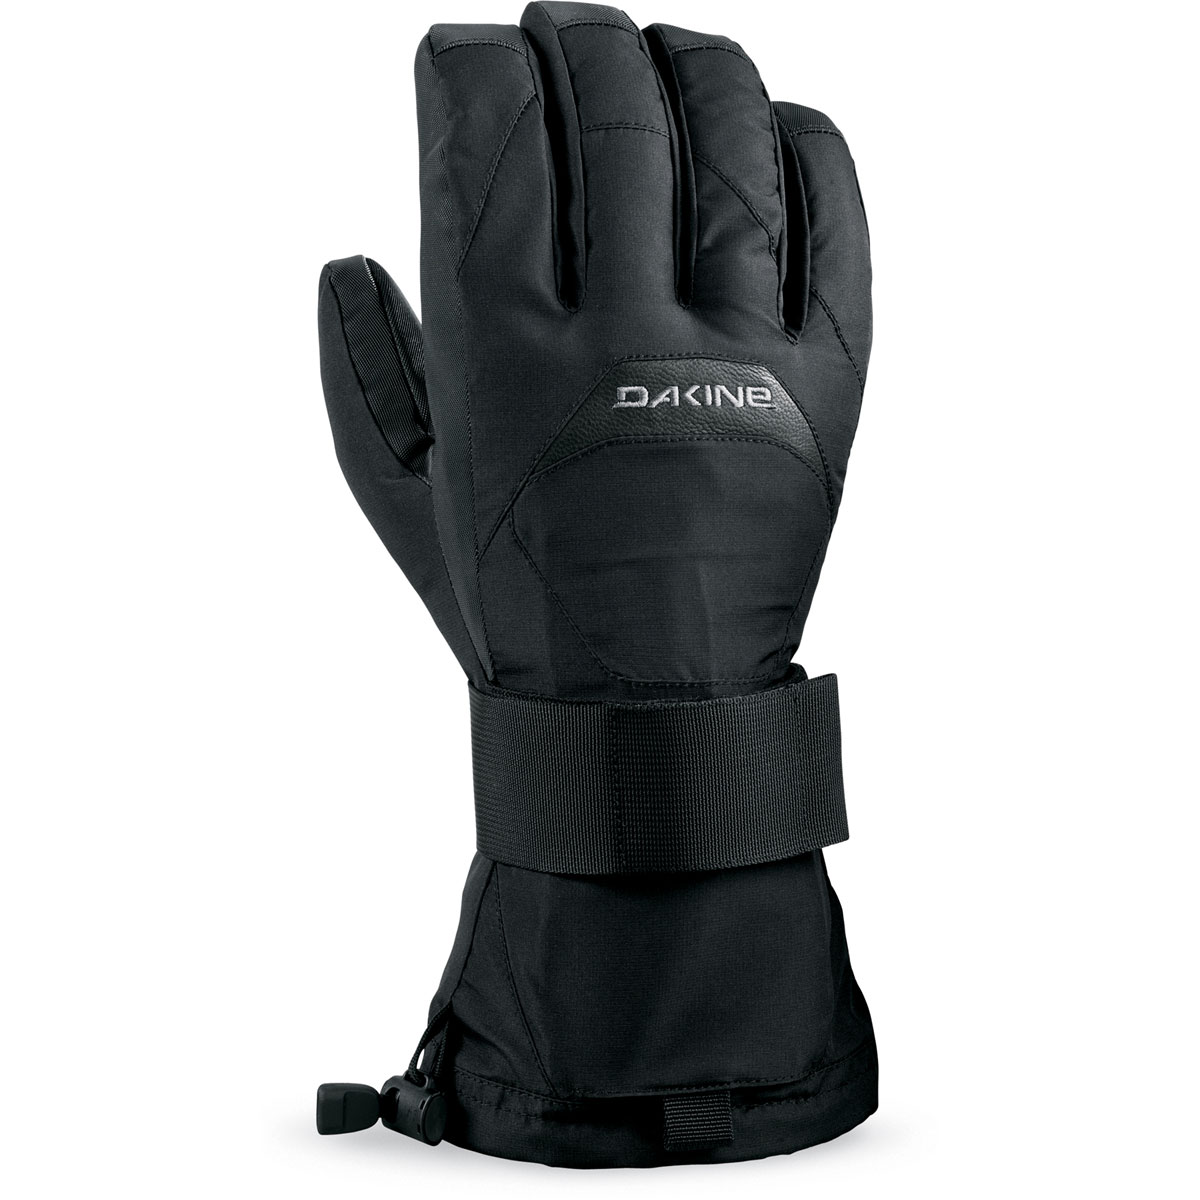 Productfoto van Dakine Wristguard Gloves - Black